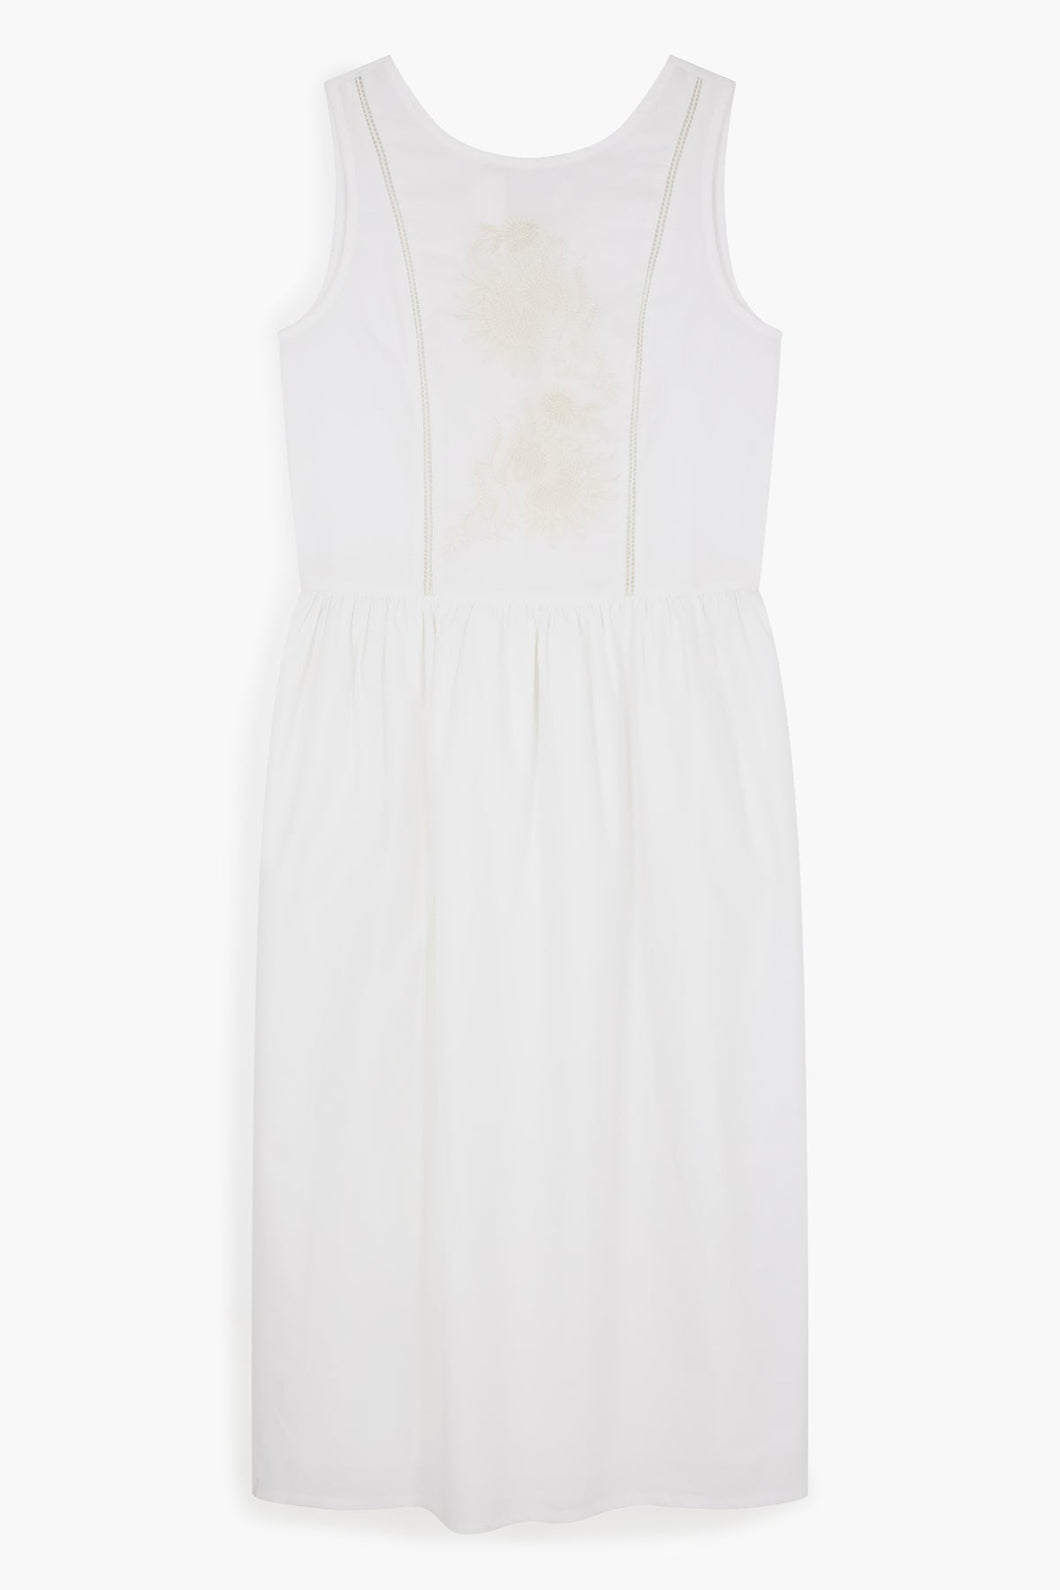 Leon & Harper River TC129 Brd + White Sleeveless Dress